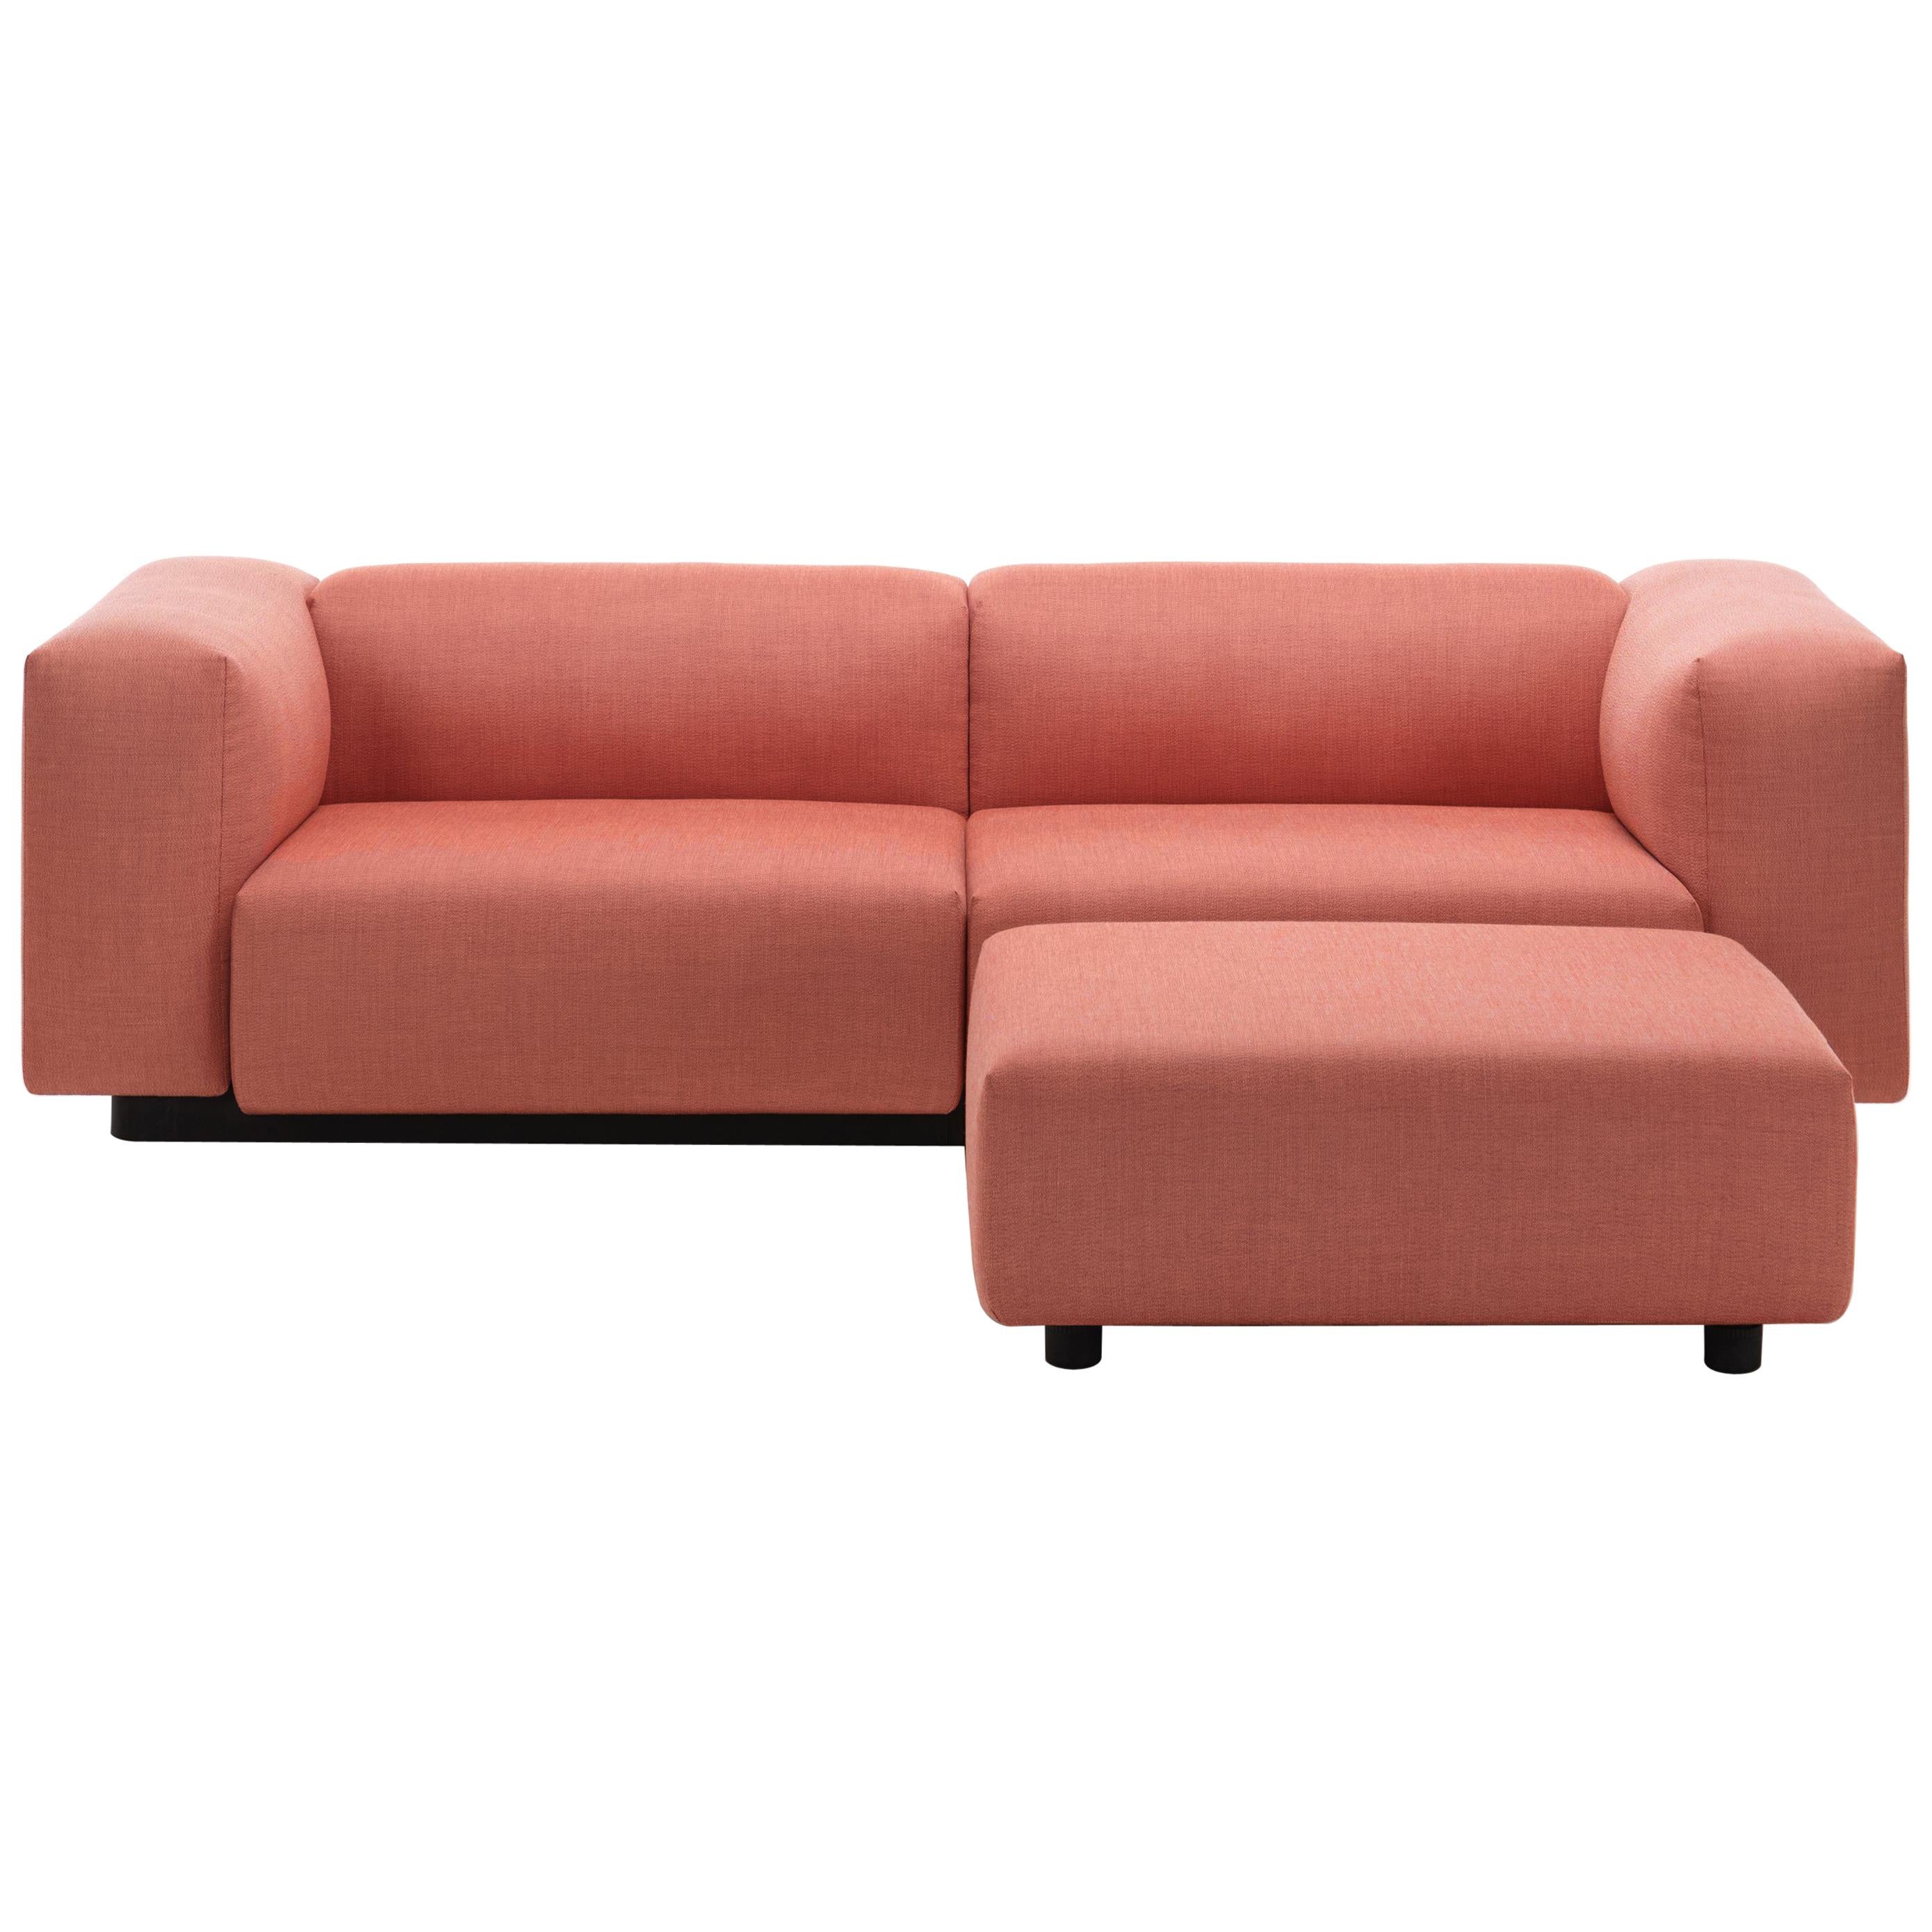 Vitra Soft Modular 2-Seat Sofa in Rose & Orange with Ottoman by Jasper Morrison For Sale